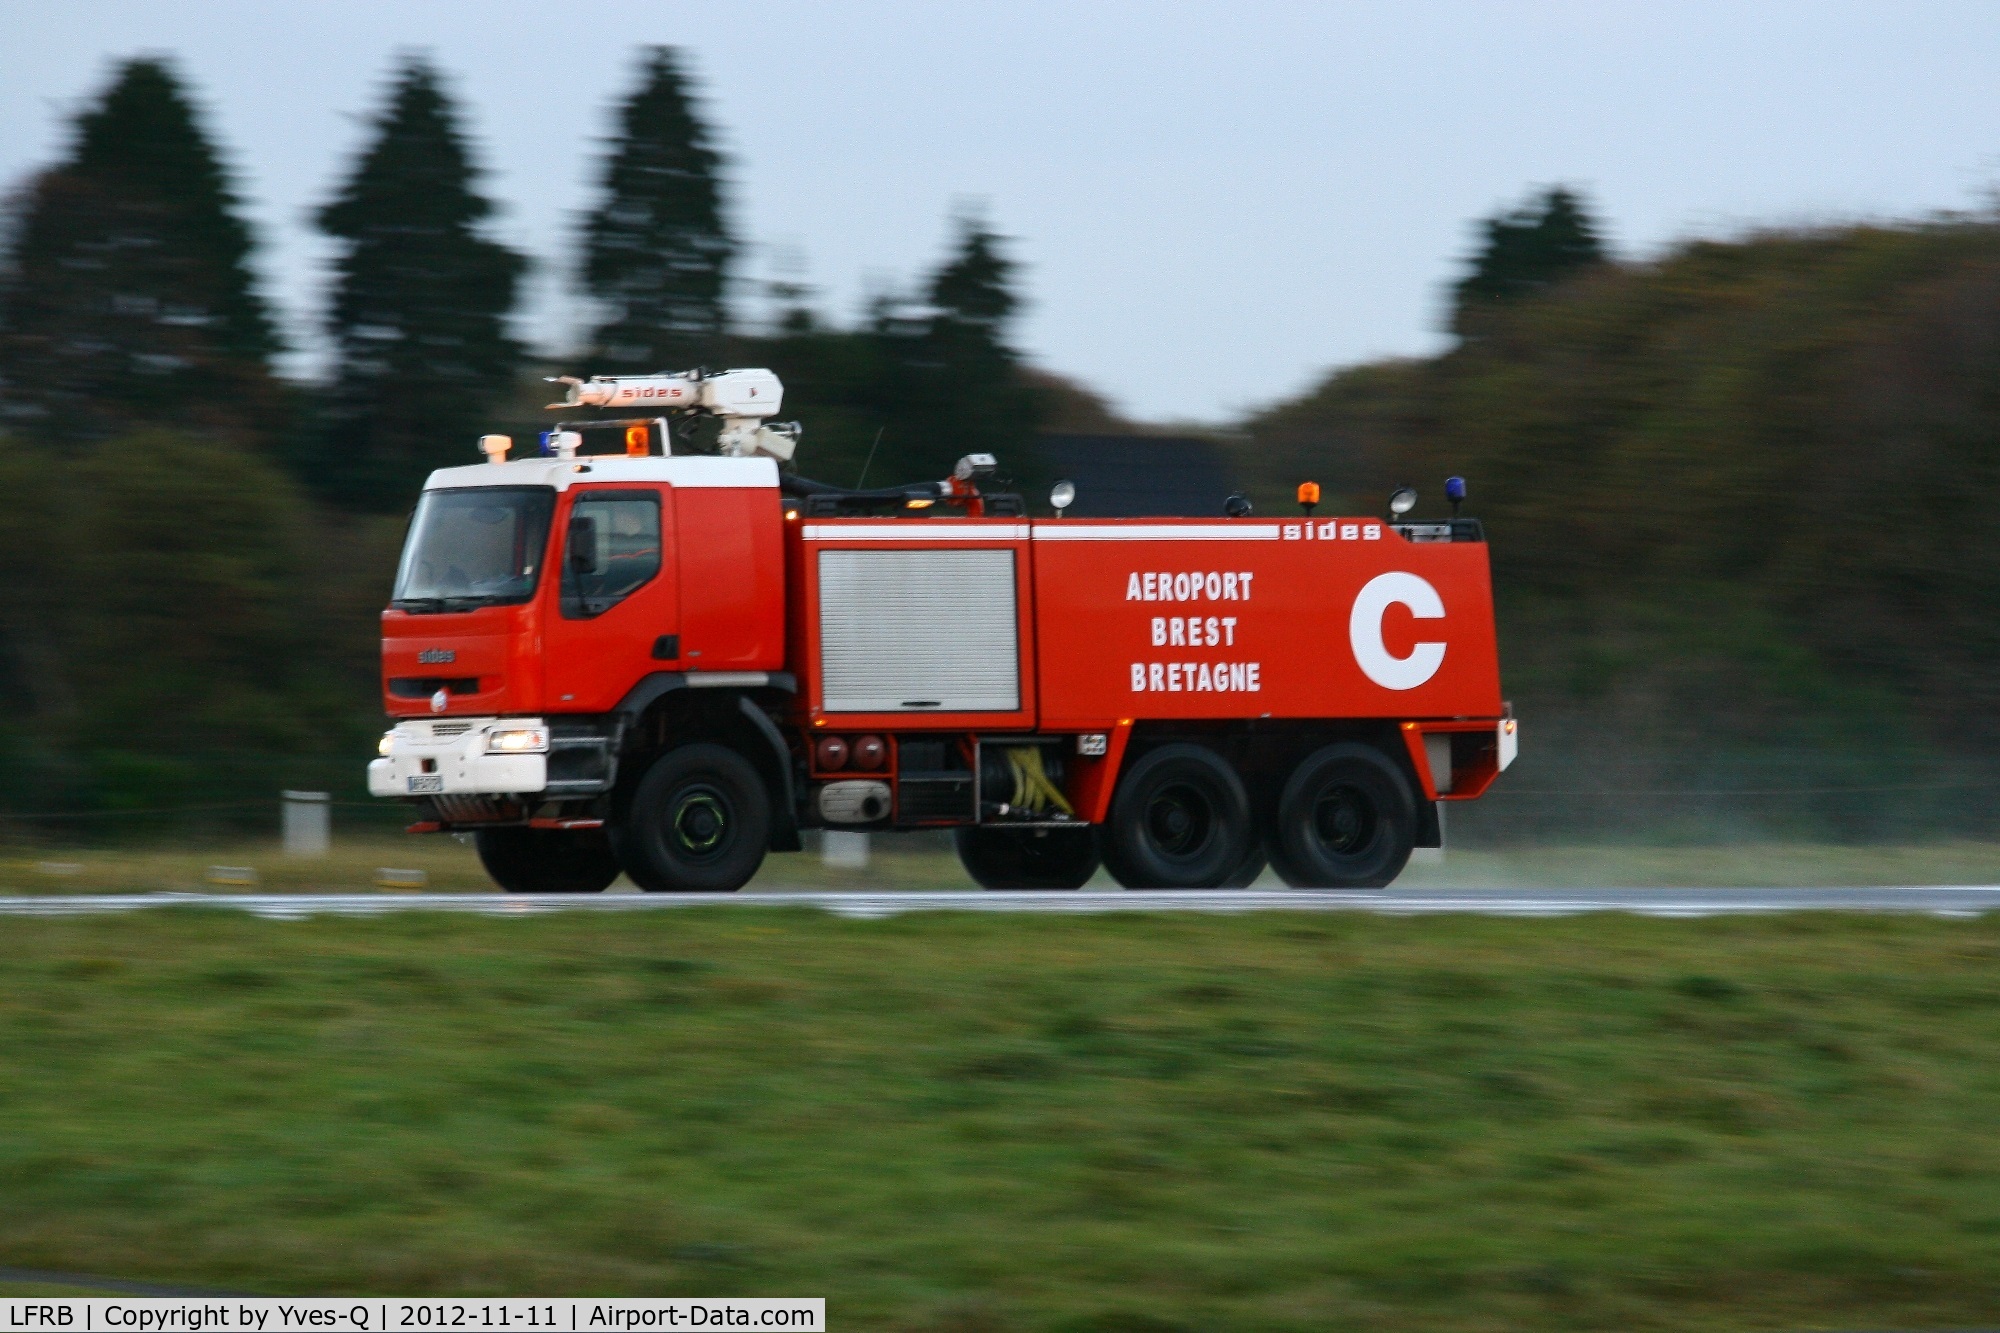 Brest Bretagne Airport, Brest France (LFRB) - Fire truck rwy 25L, Brest-Bretagne Airport (LFRB-BES)